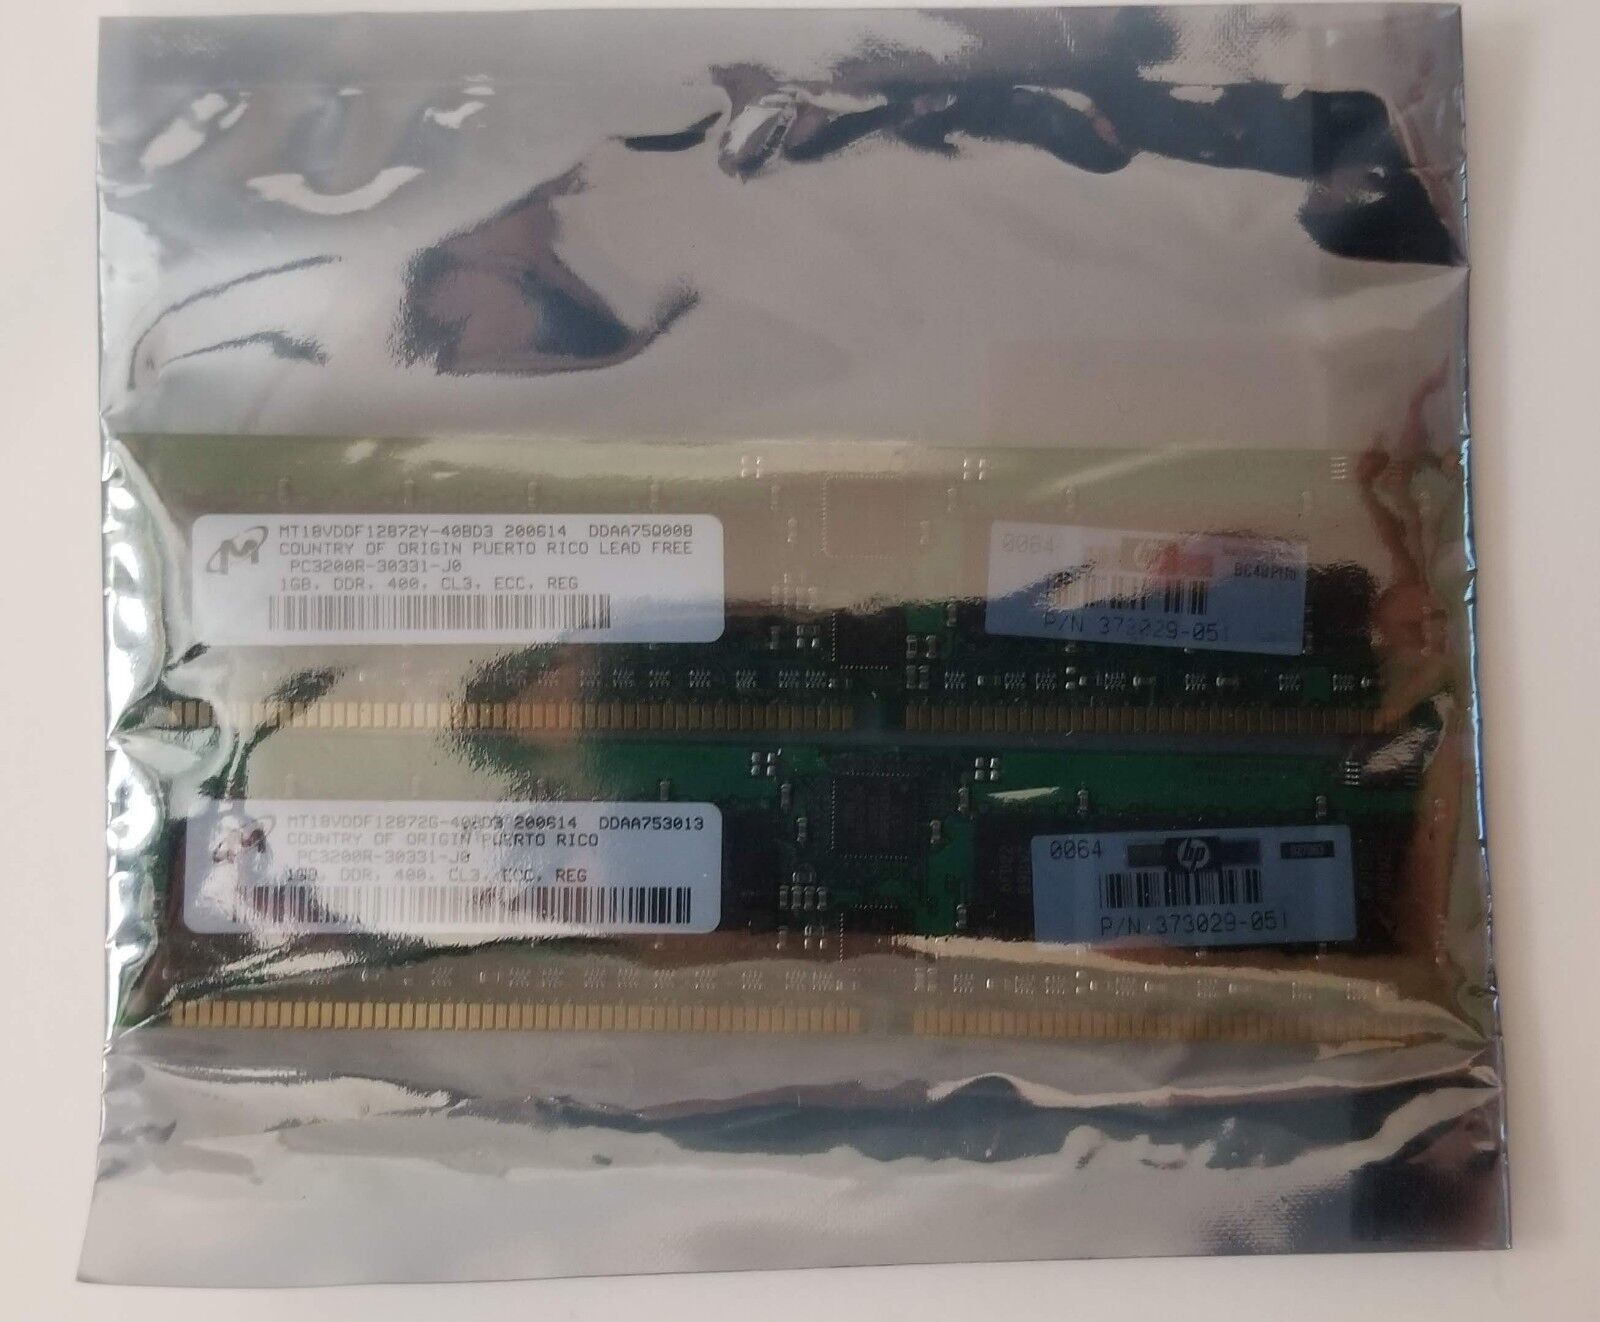 Set of 2- MICRON 1GB, DDR, CL3, ECC, PC3200R-30331-J0-  HP